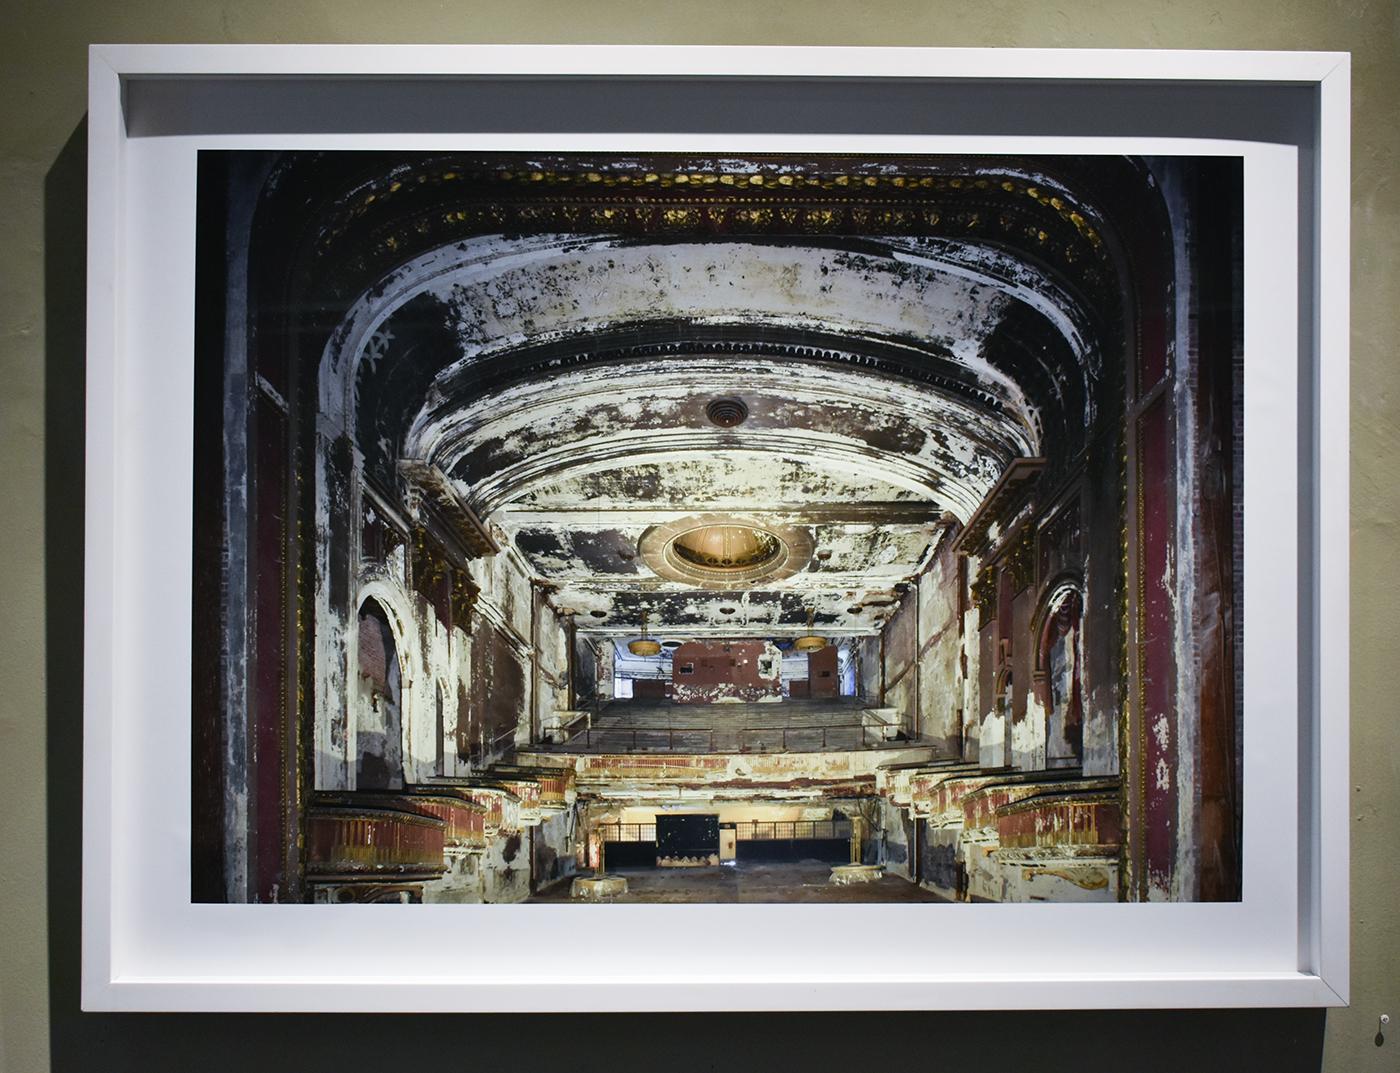 Capitol Theatre Auditorium (Contemporary Photograph of an Abandoned Interior)  - Black Still-Life Photograph by Elliott Kaufman